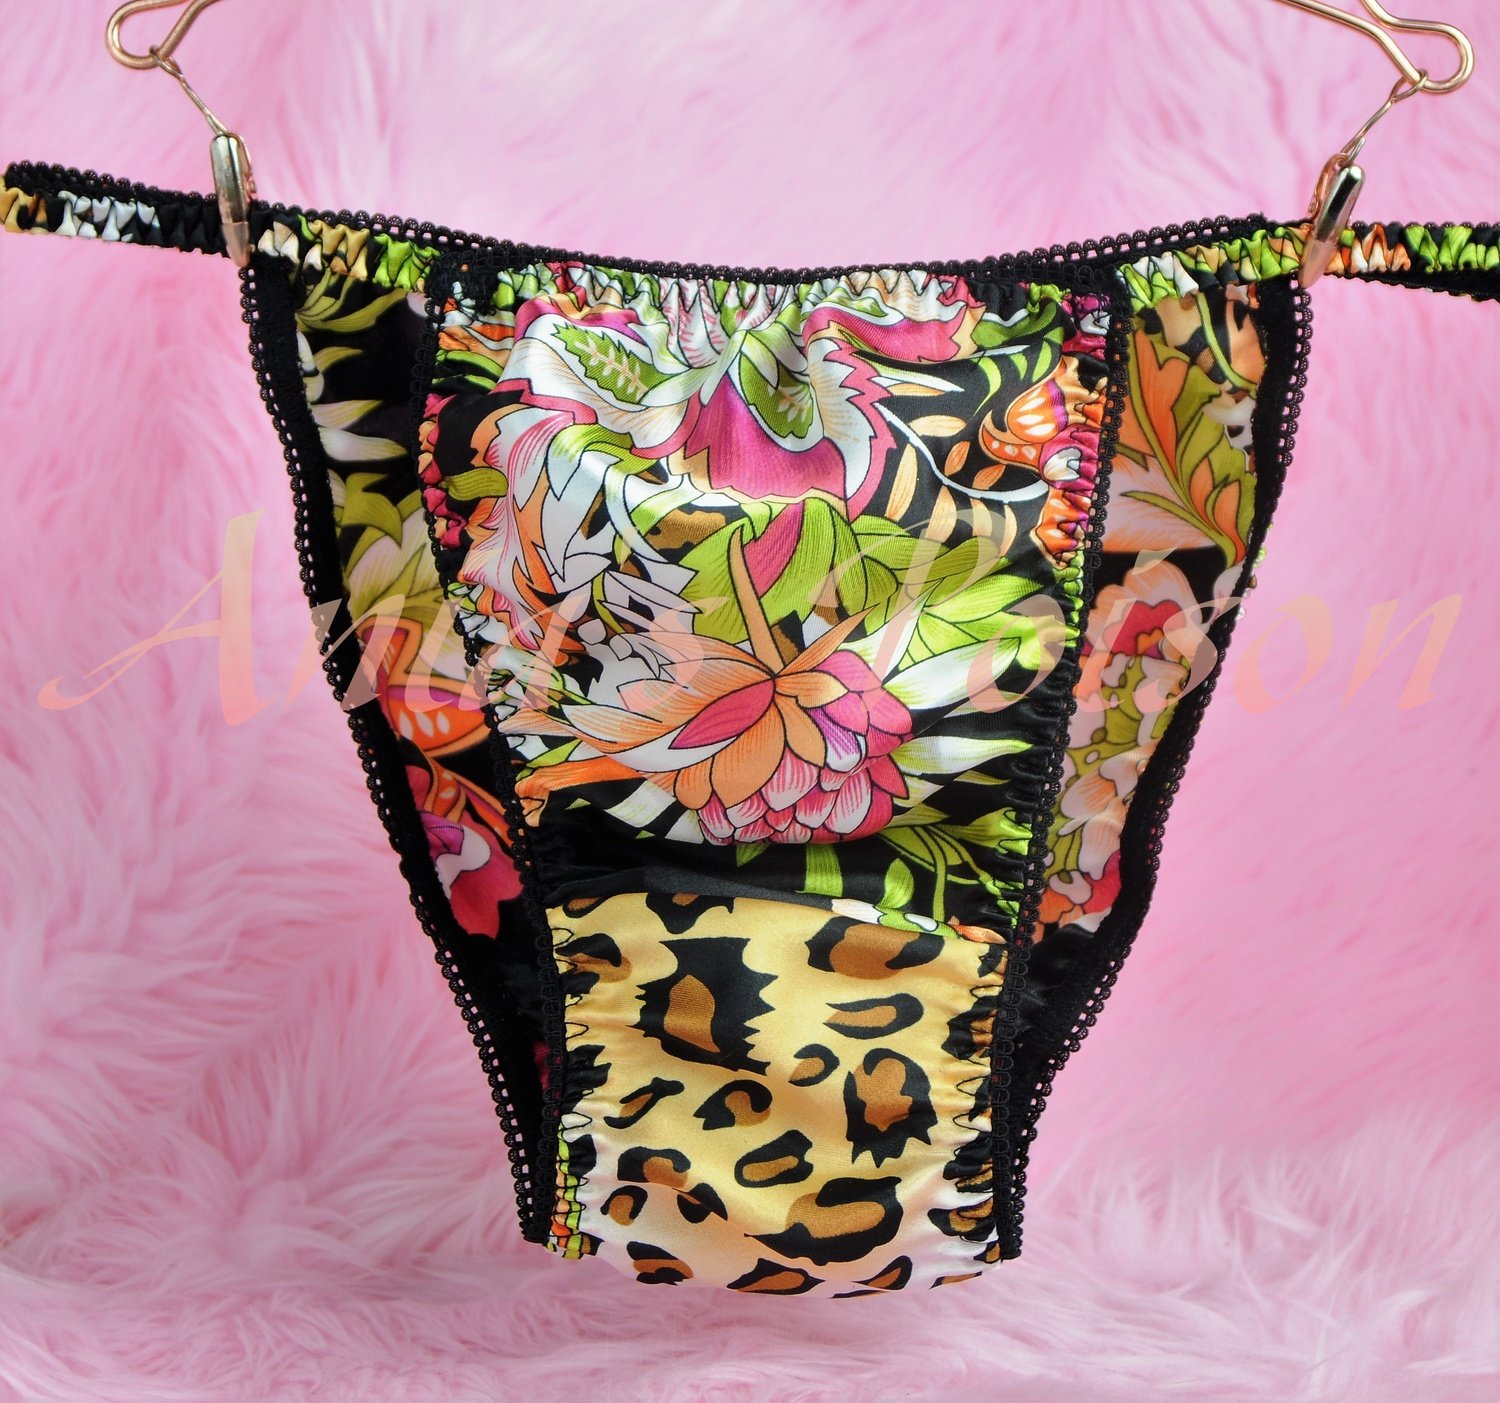 Ania's Poison BLACK S - XXL Floral Leopard Animal Prints Asian 100% polyester string bikini sissy mens underwear panties DEAD STOCK